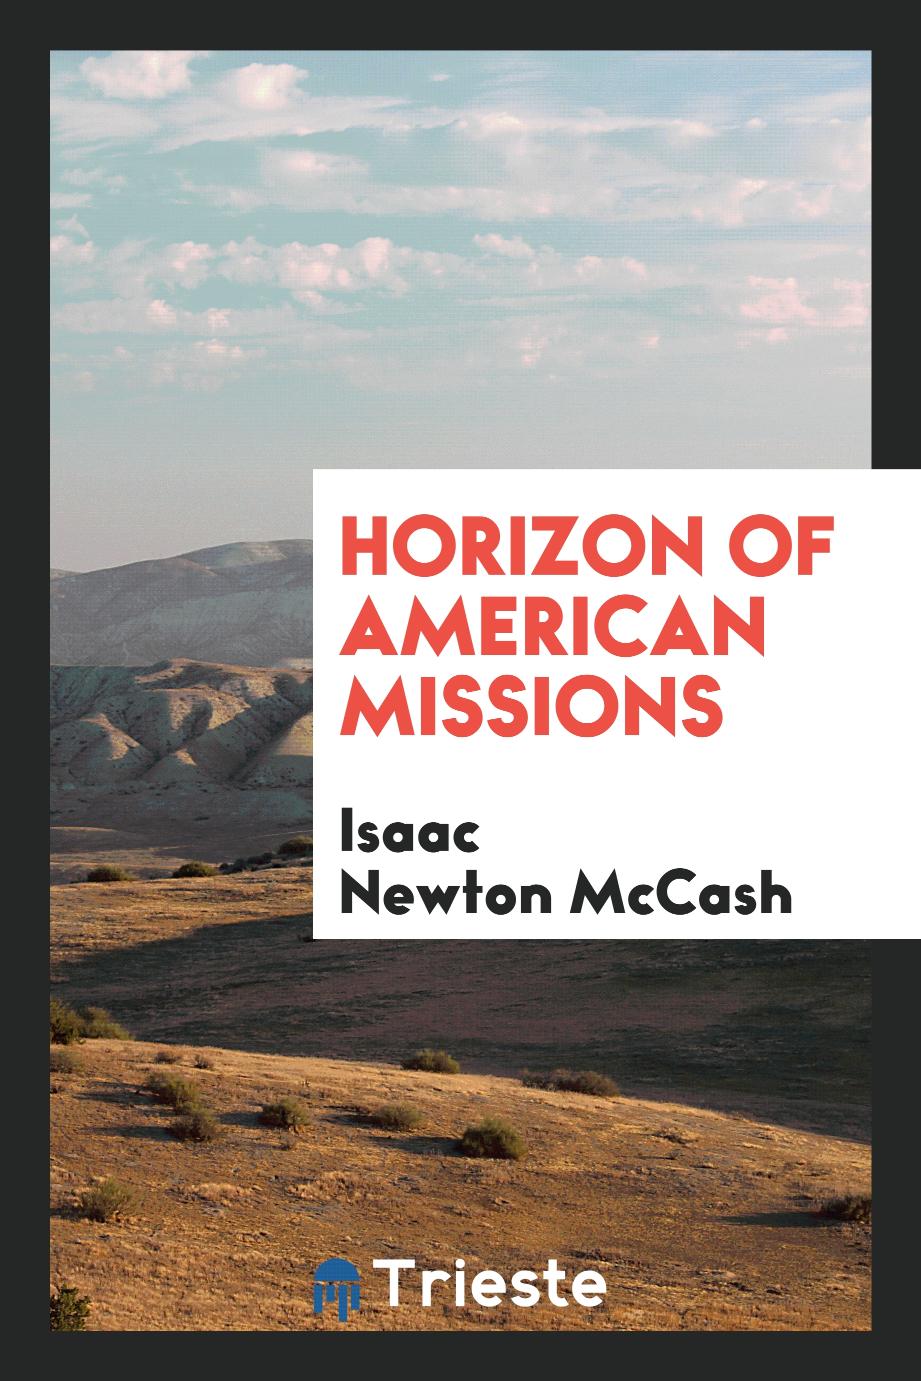 Horizon of American missions